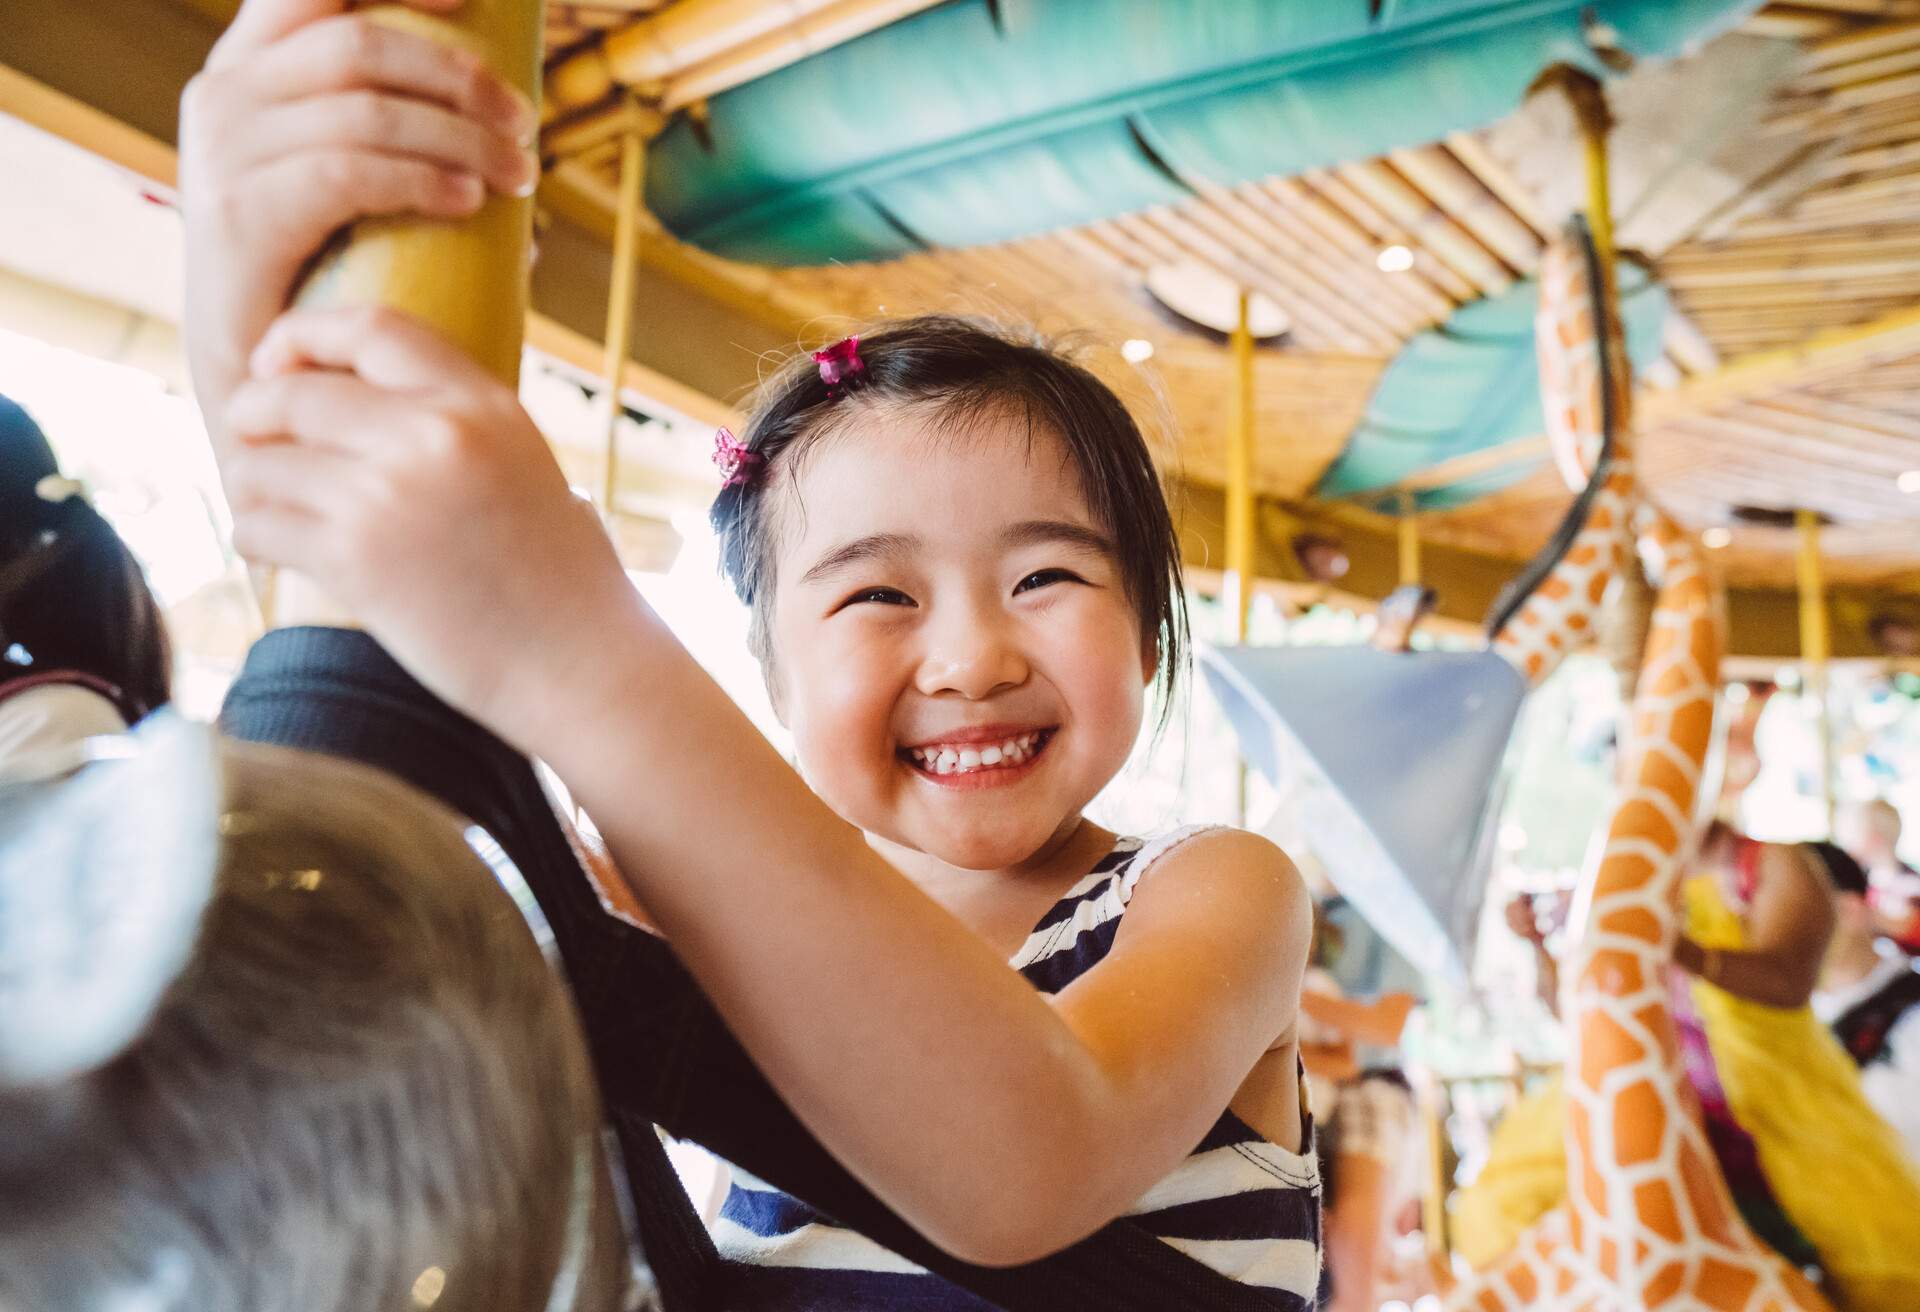 A joyful little girl rides on a carousel.